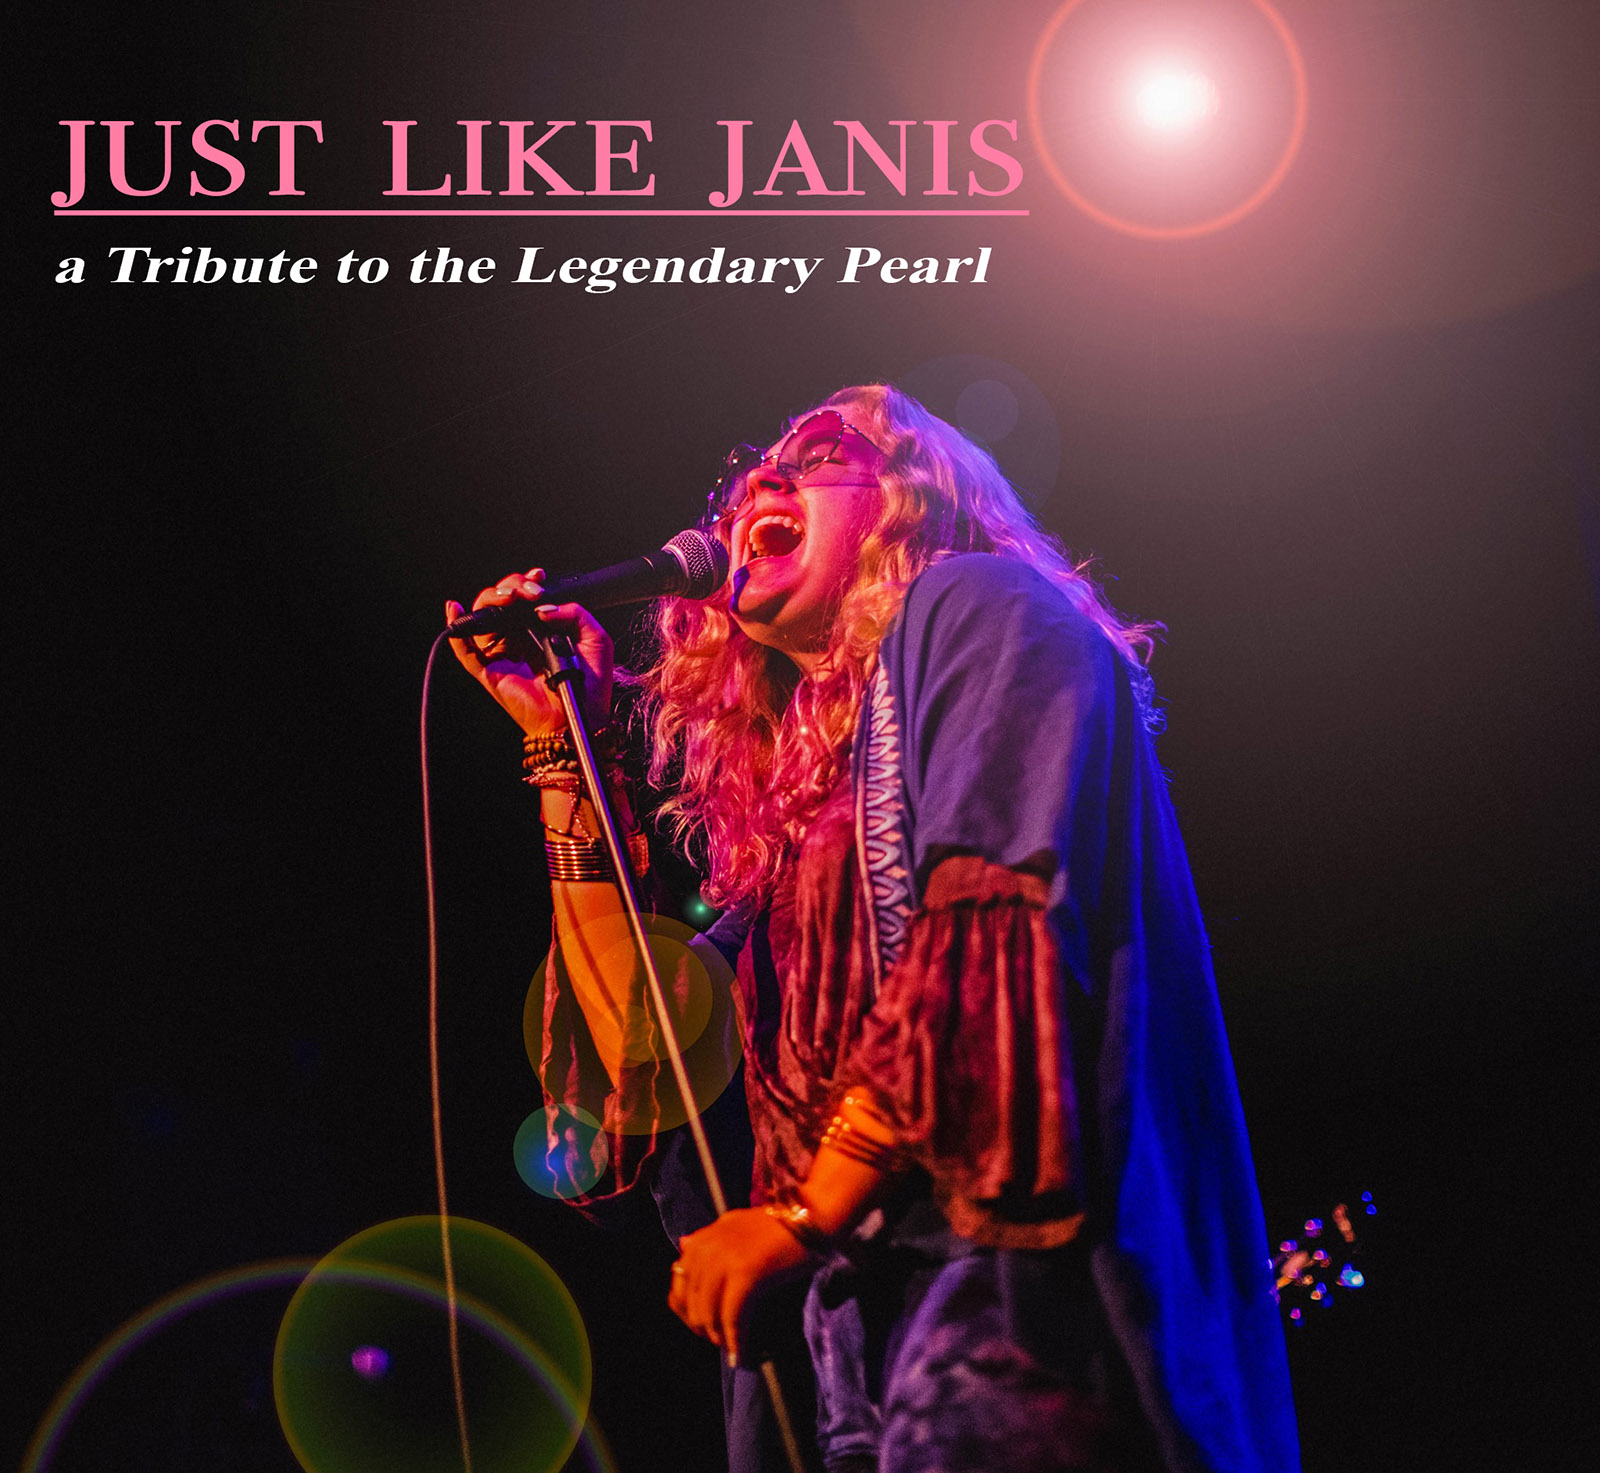 Janis Joplin Musical Leaving Broadway, But Not Going Away